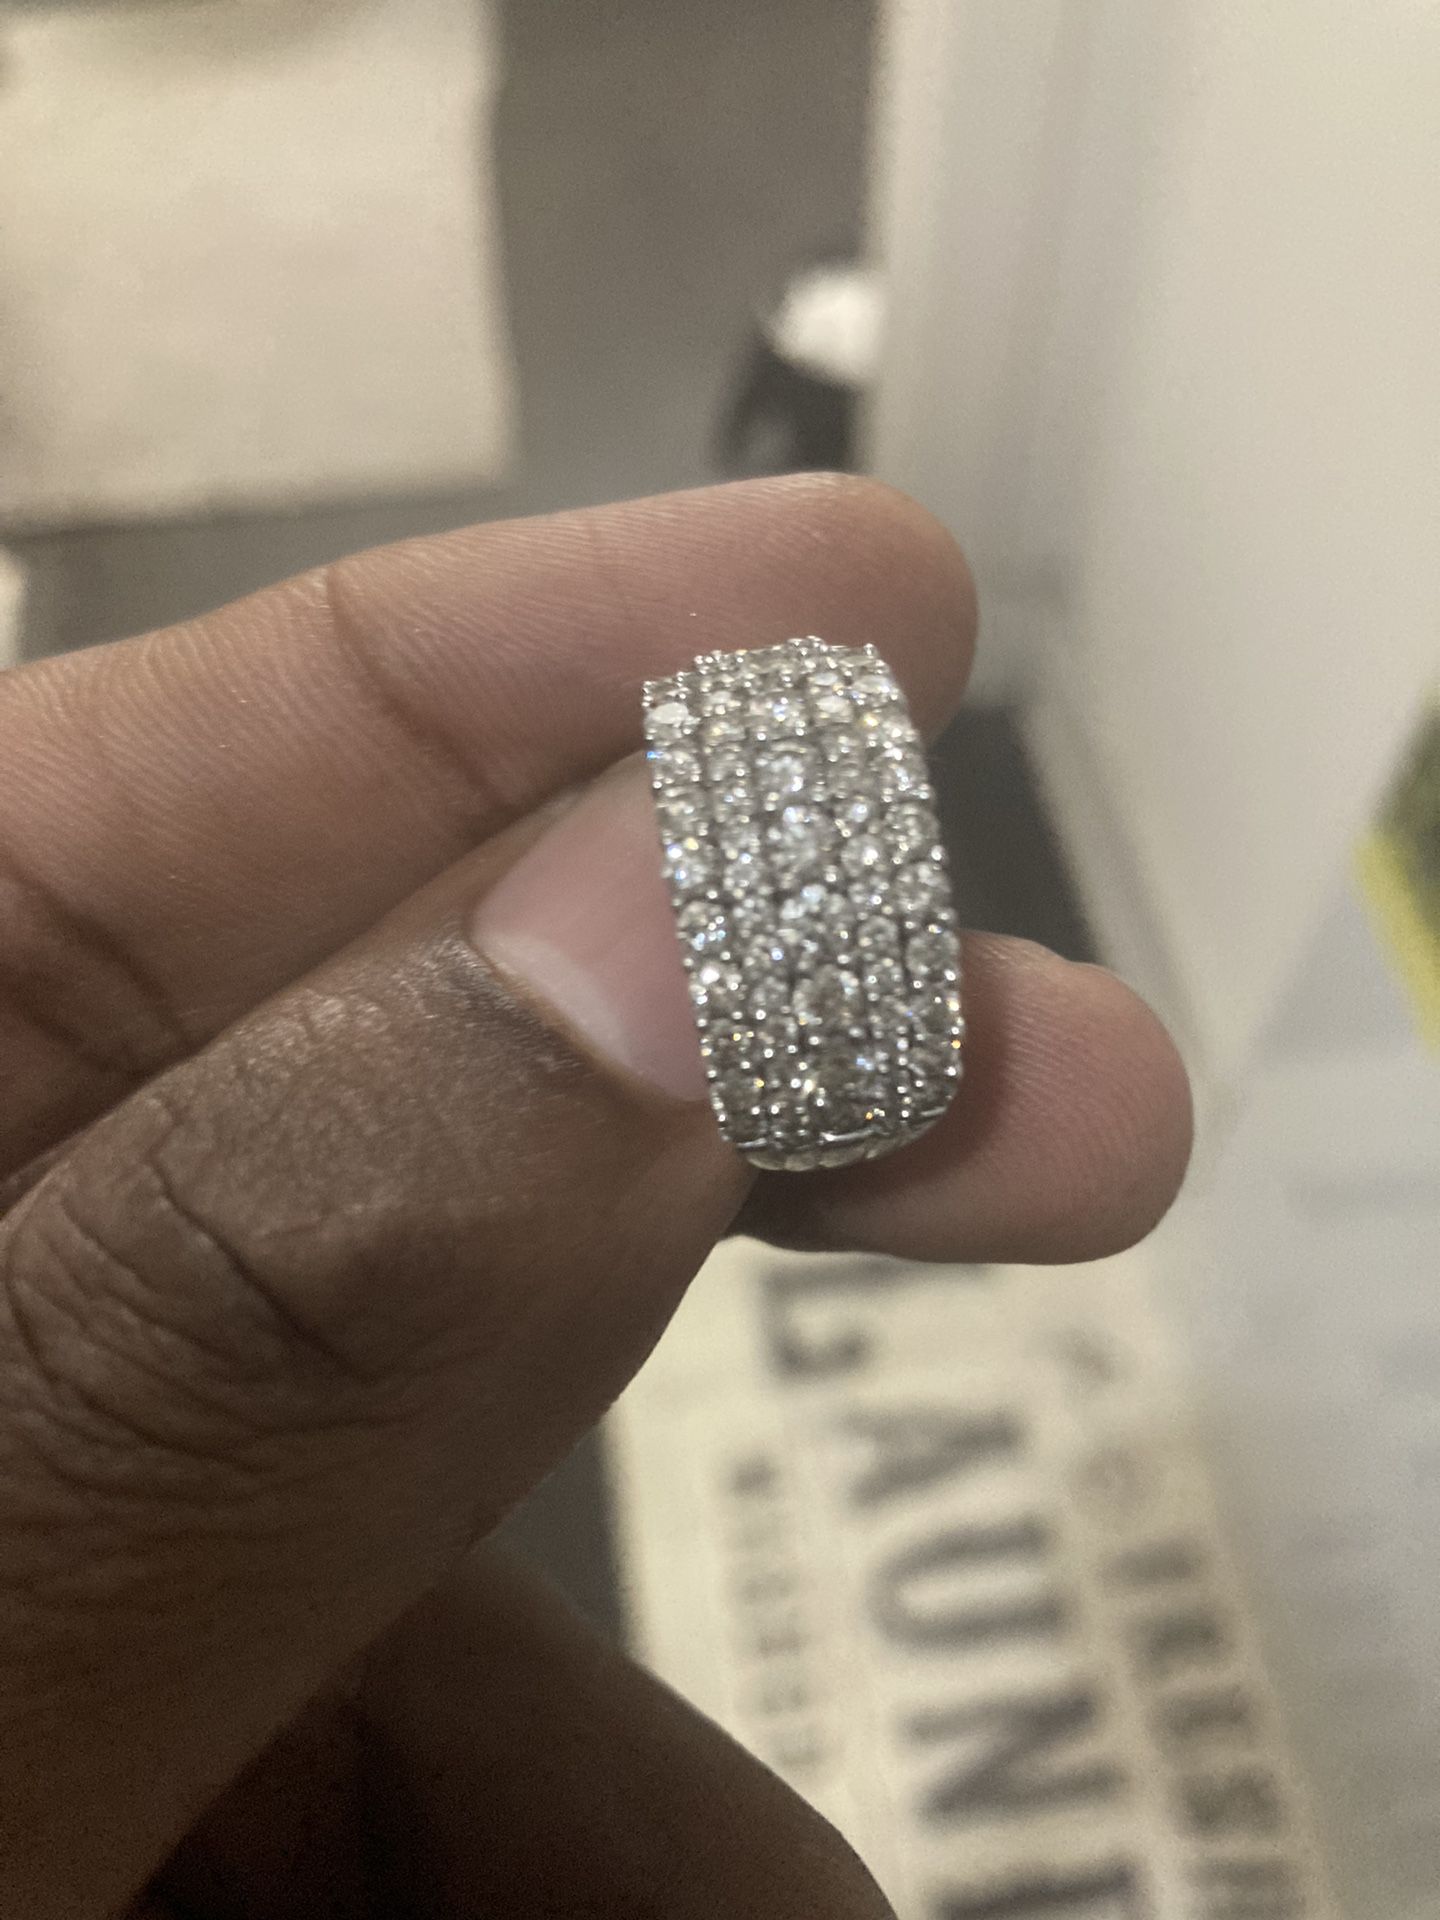 4 Carat Diamond Ring